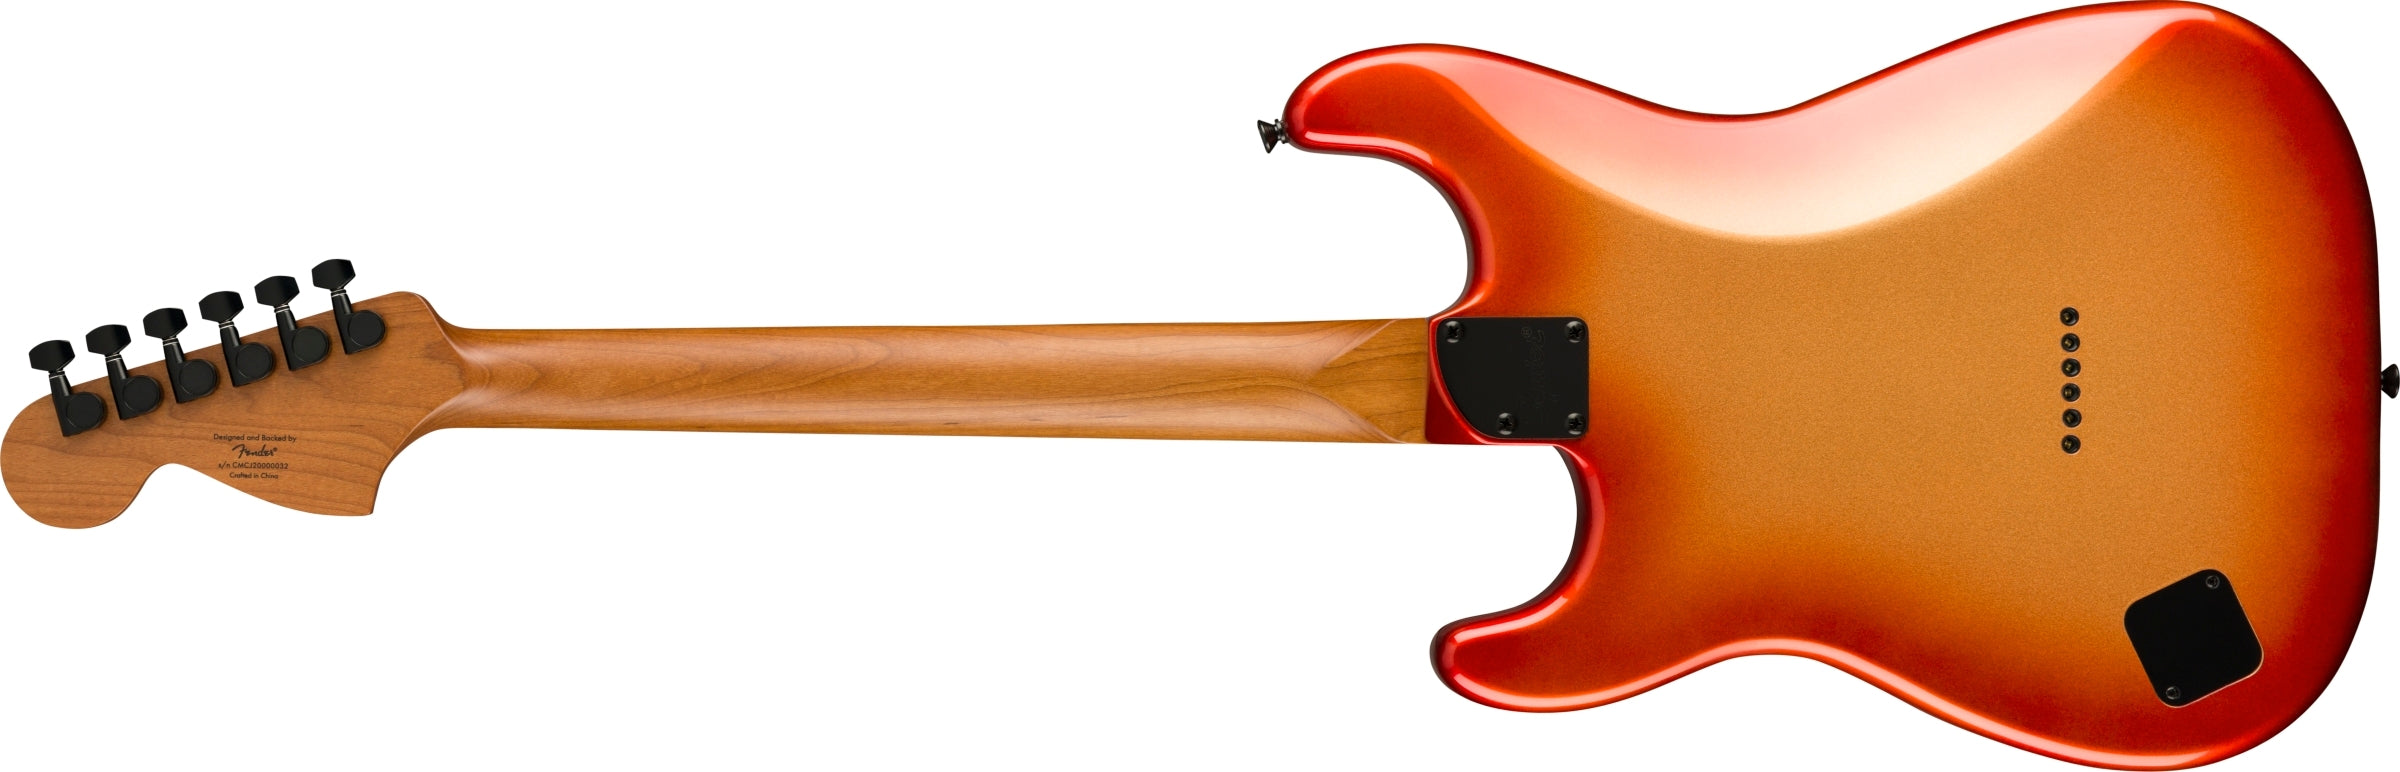 Squier Contemporary Stratocaster Speacial HT Electric Guitar - Sunset Metallic